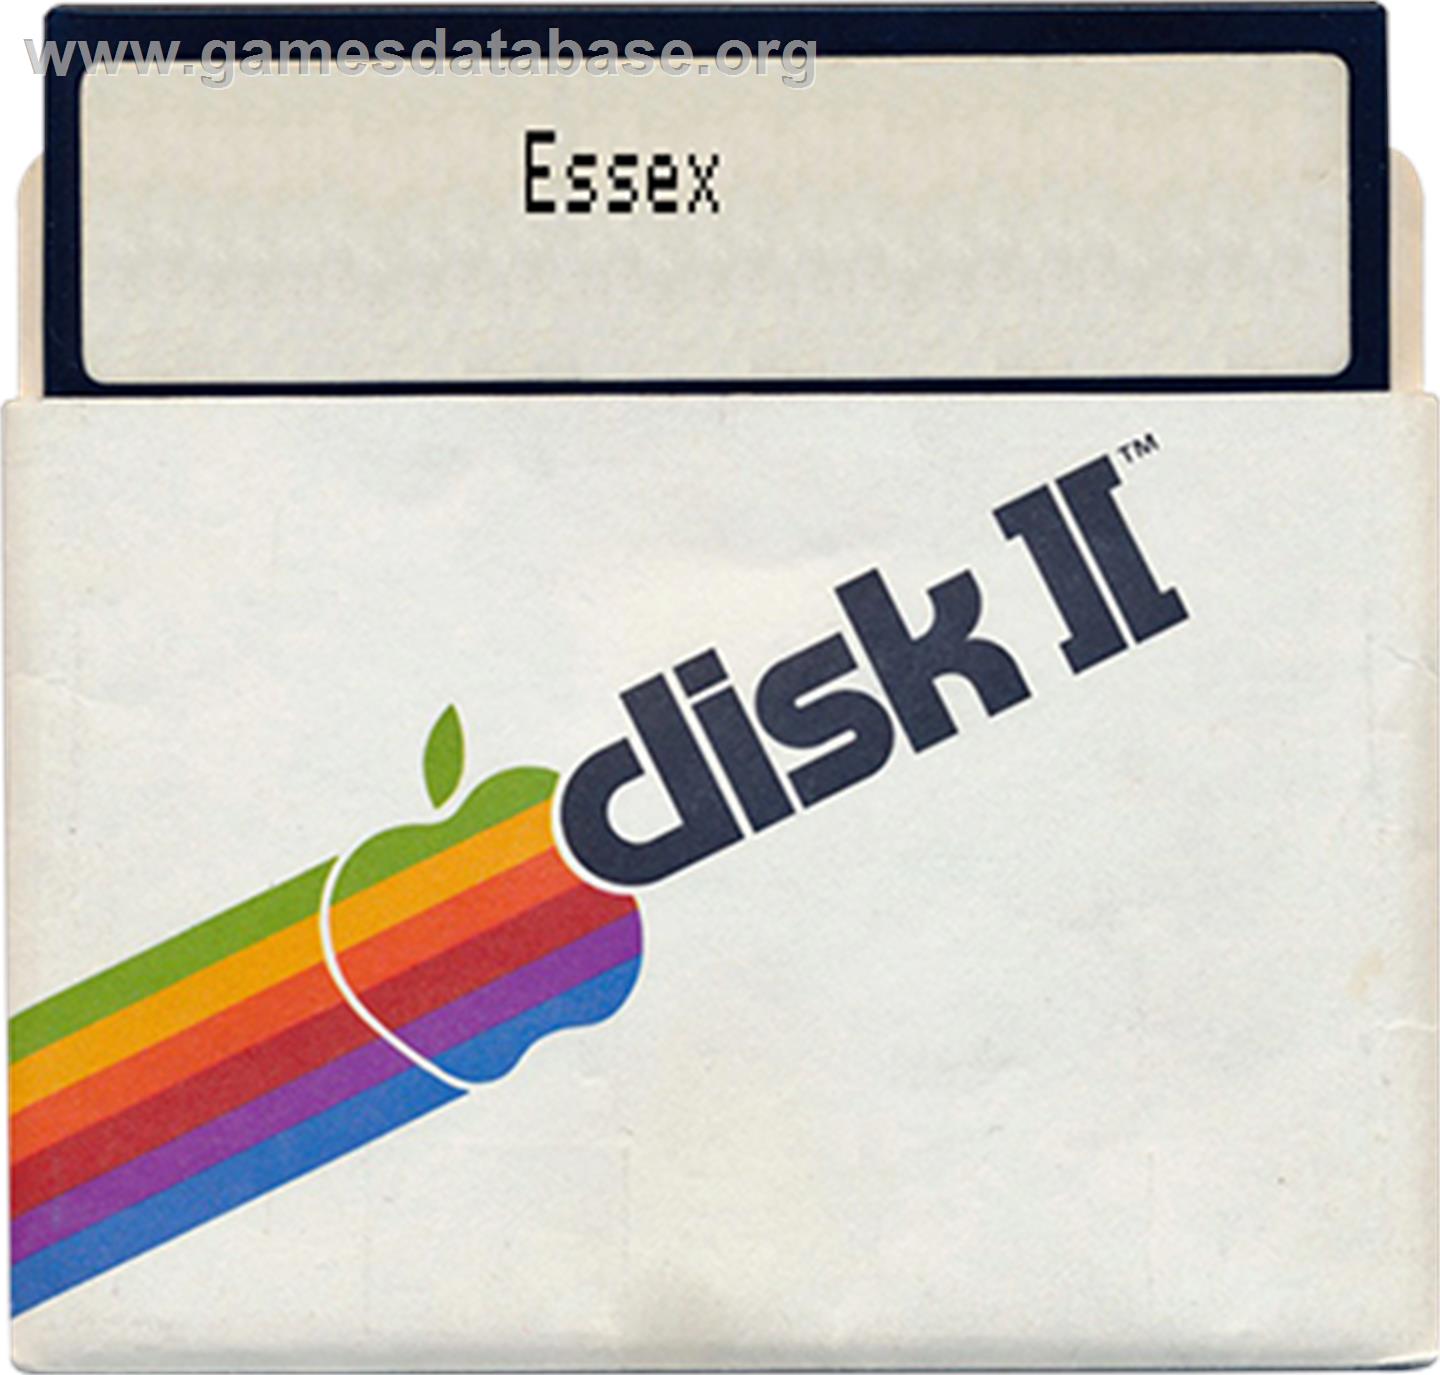 Essex - Apple II - Artwork - Disc